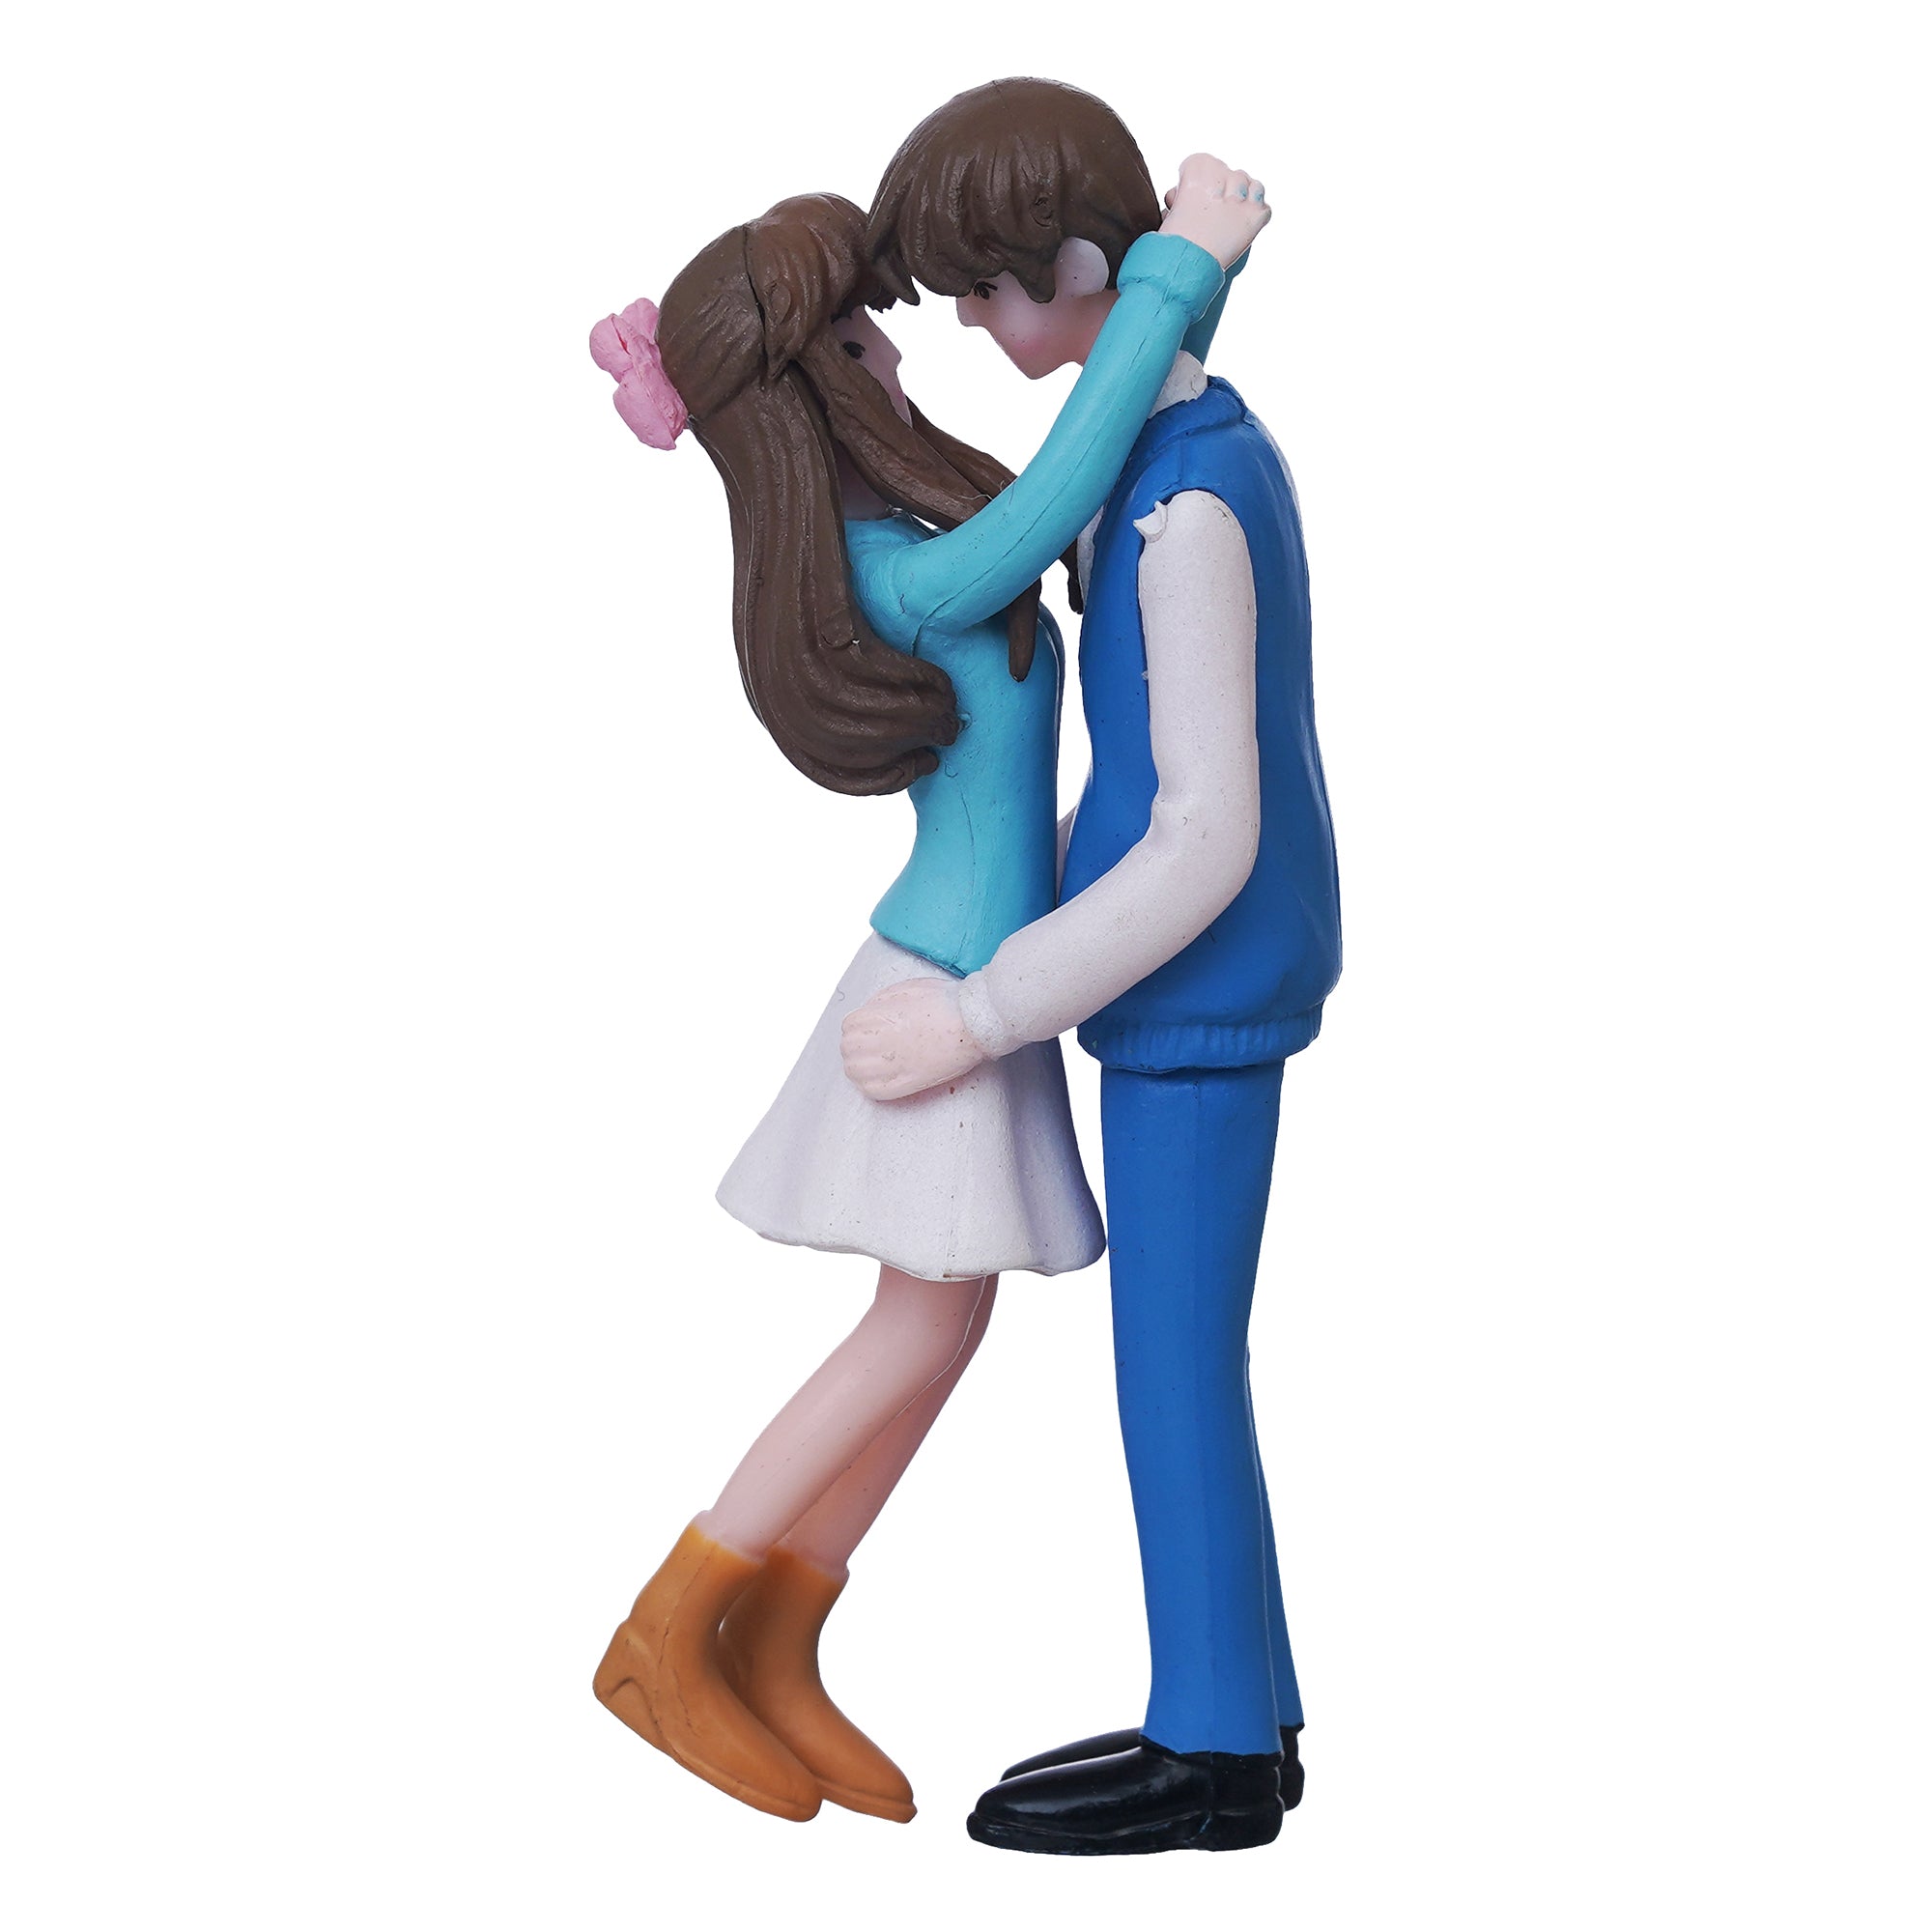 eCraftIndia Romantic Hugging Couple Statue Decorative Valentine's Day Showpiece 2